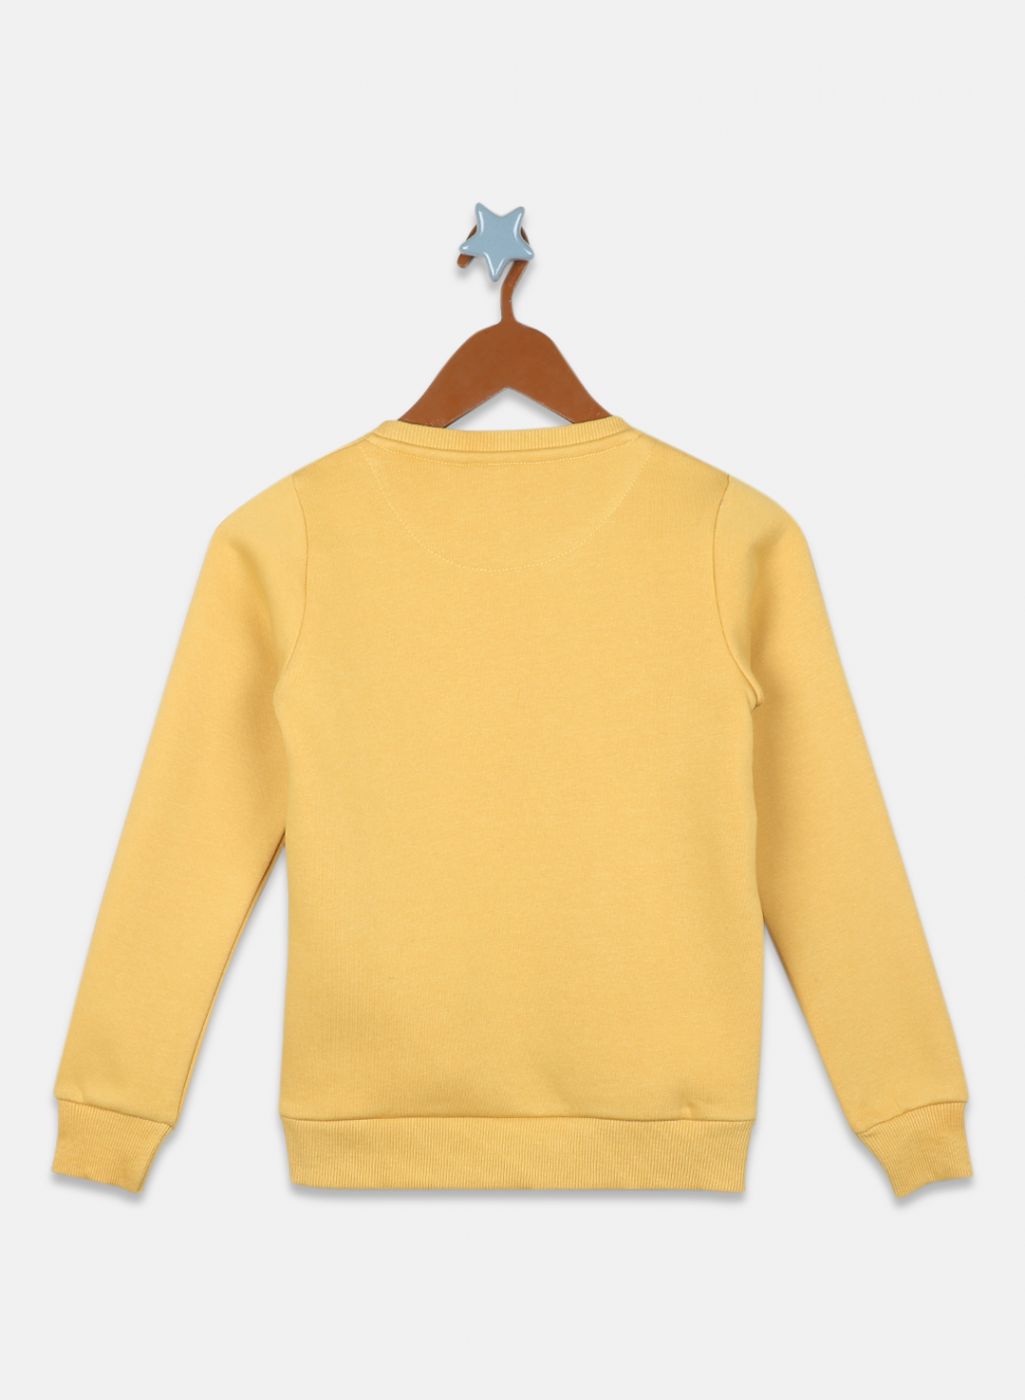 Girls Mustard Printed Sweatshirt